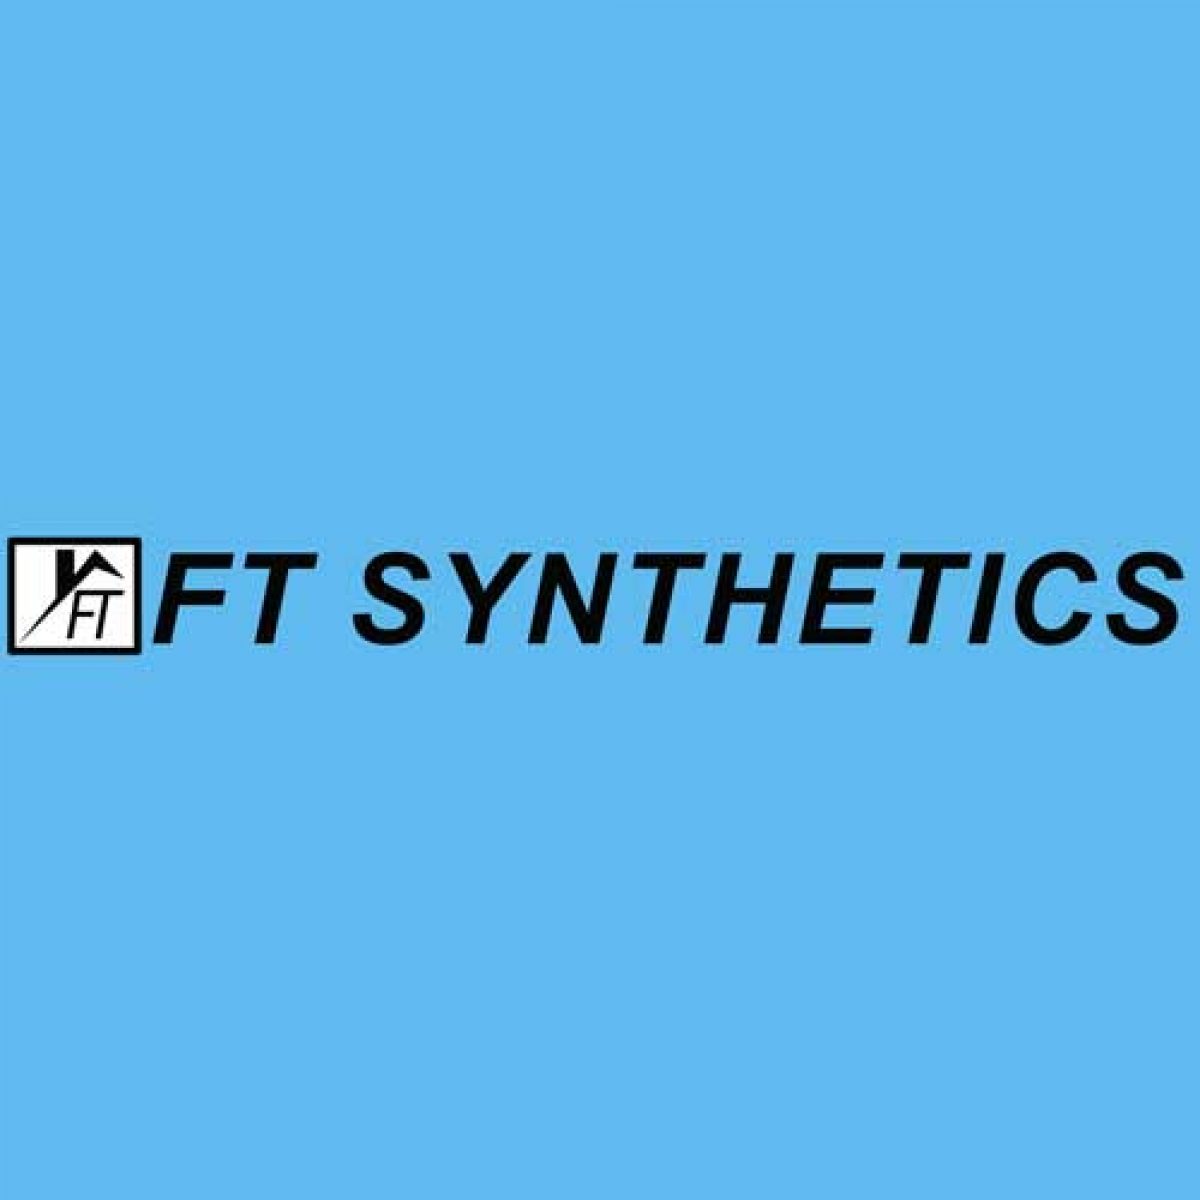 Congress Associates FT Synthetics